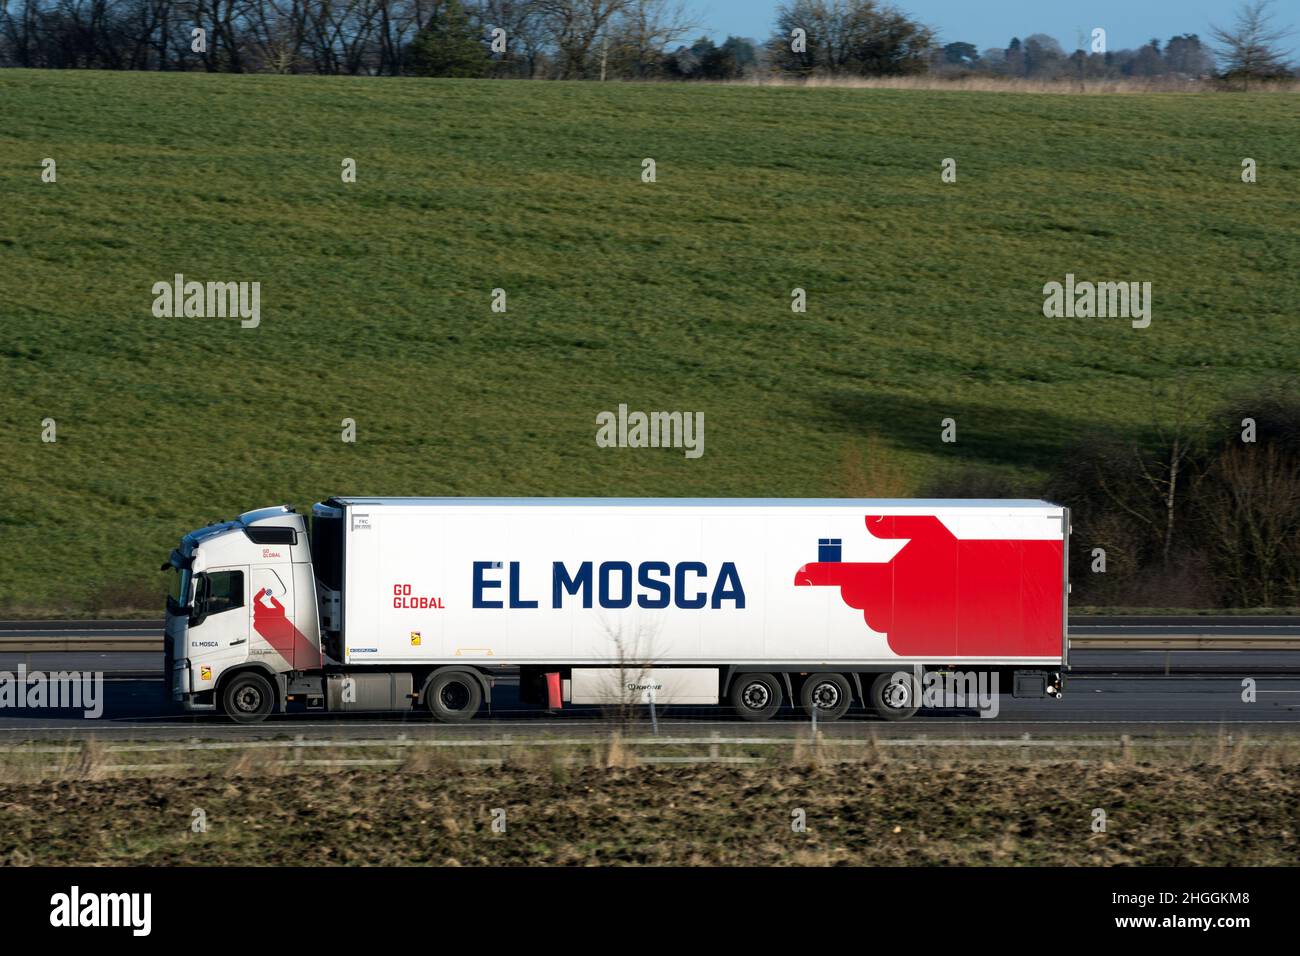 El Mosca lorry on the M40 motorway, Warwickshire, UK Stock Photo